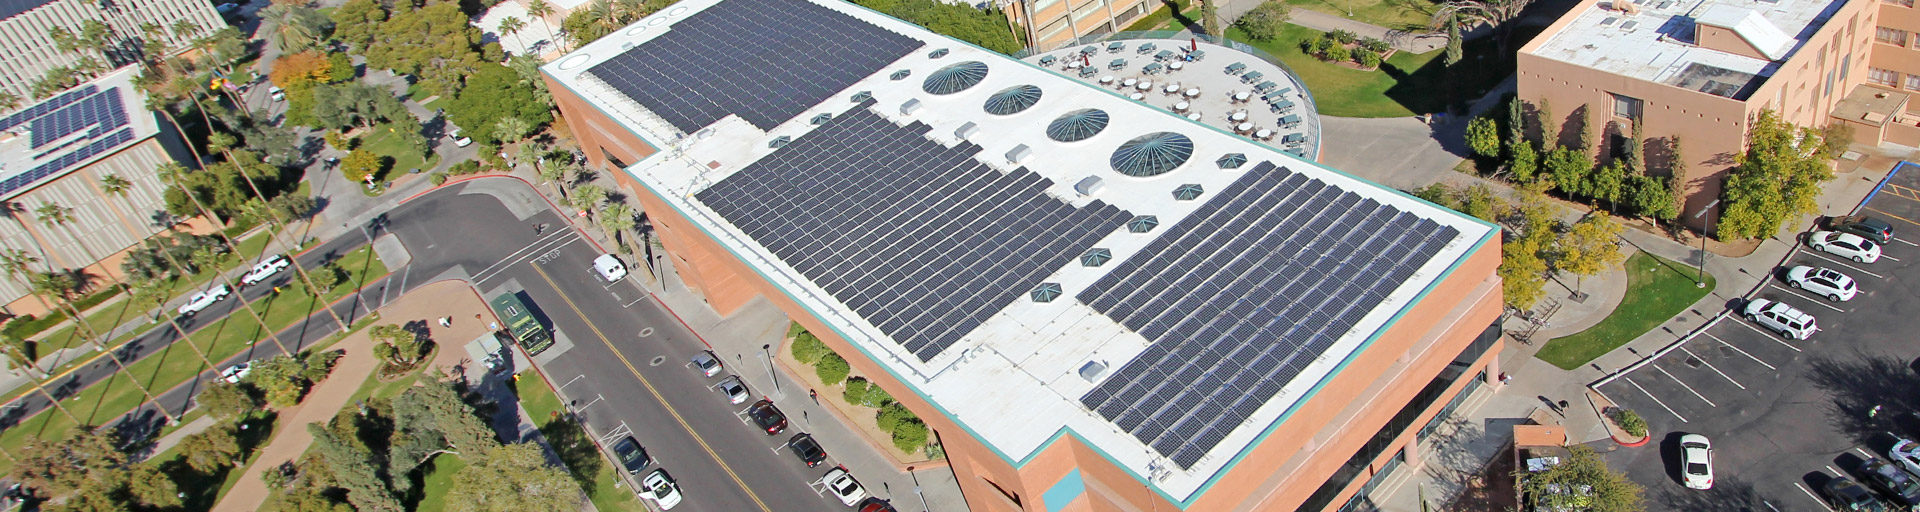 Student Services - solar